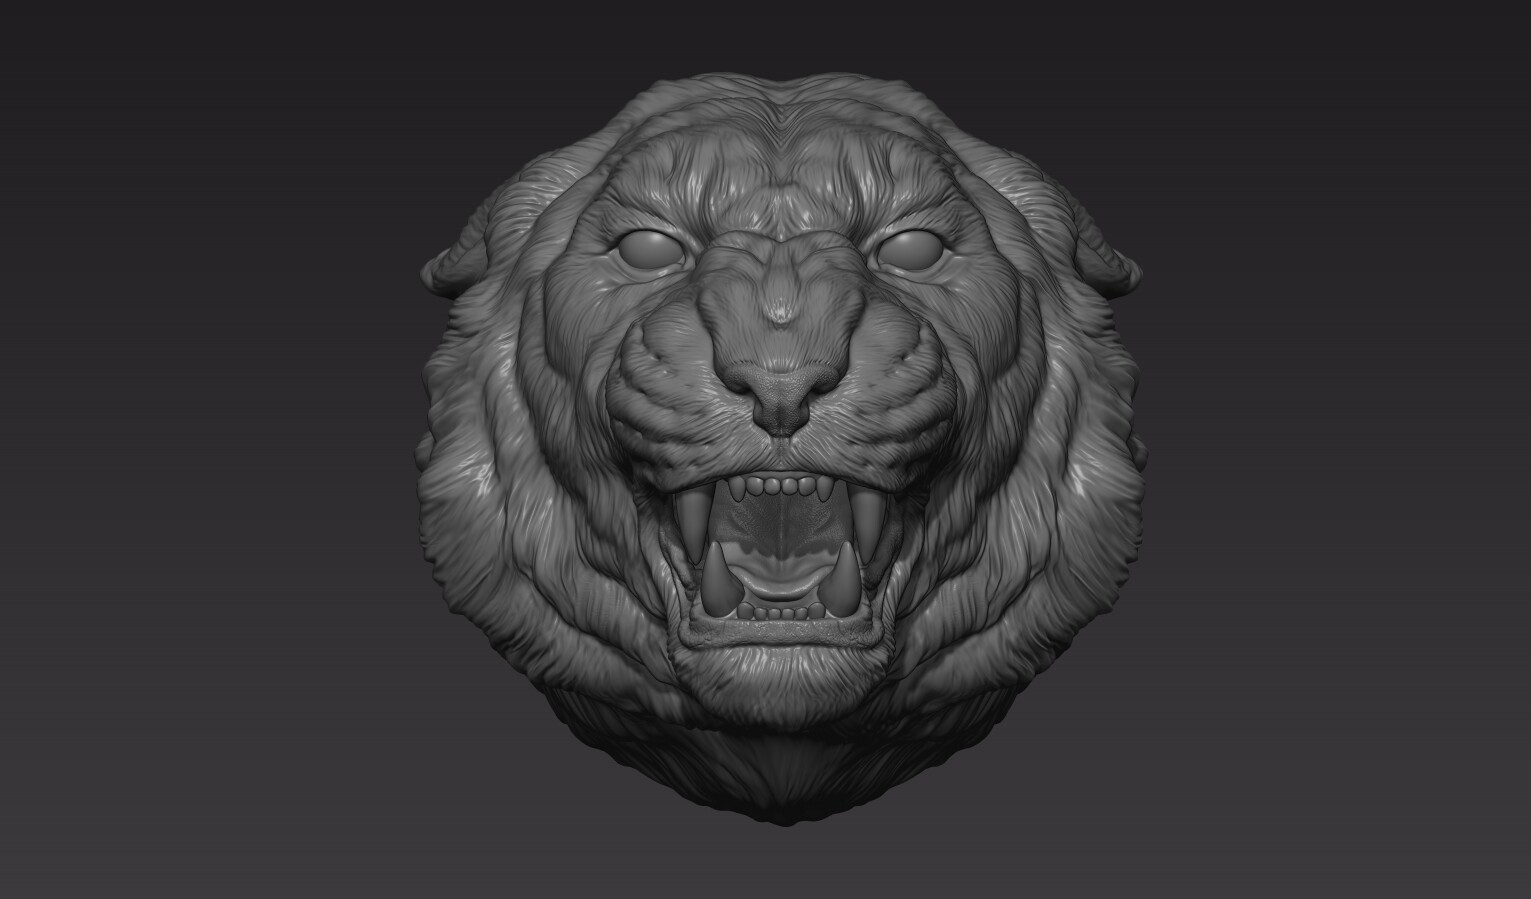 ArtStation - Tiger head roar | Resources